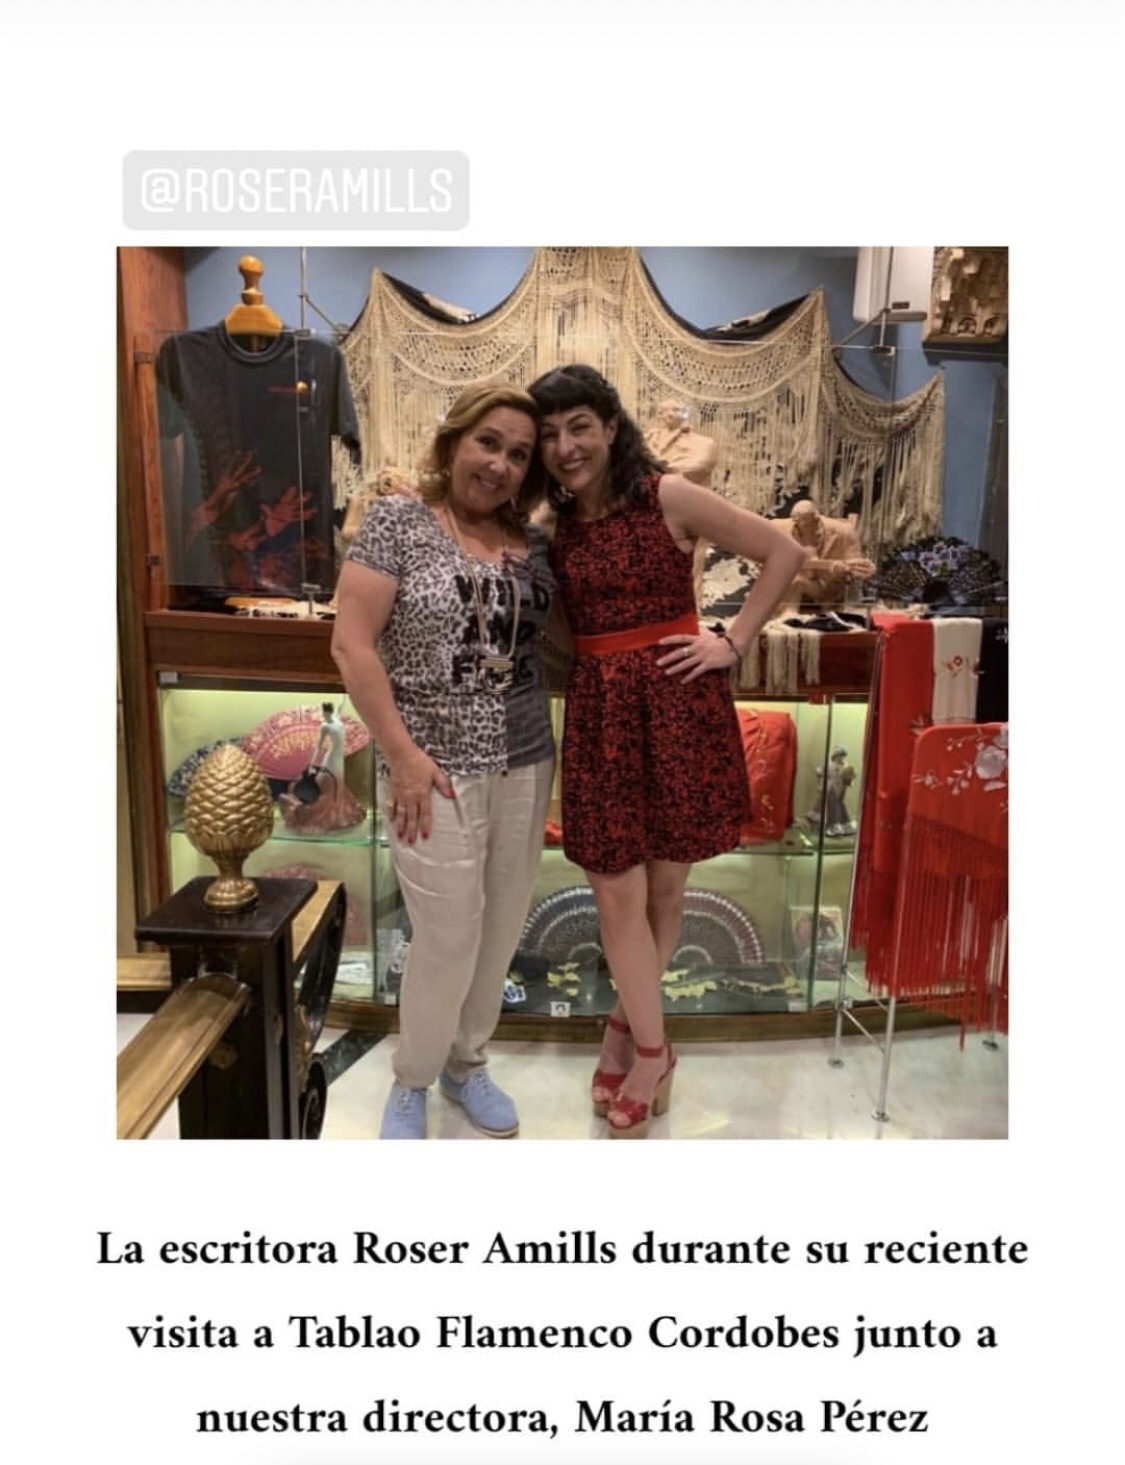 Roser Amills tablao flamenco cordobes barcelona